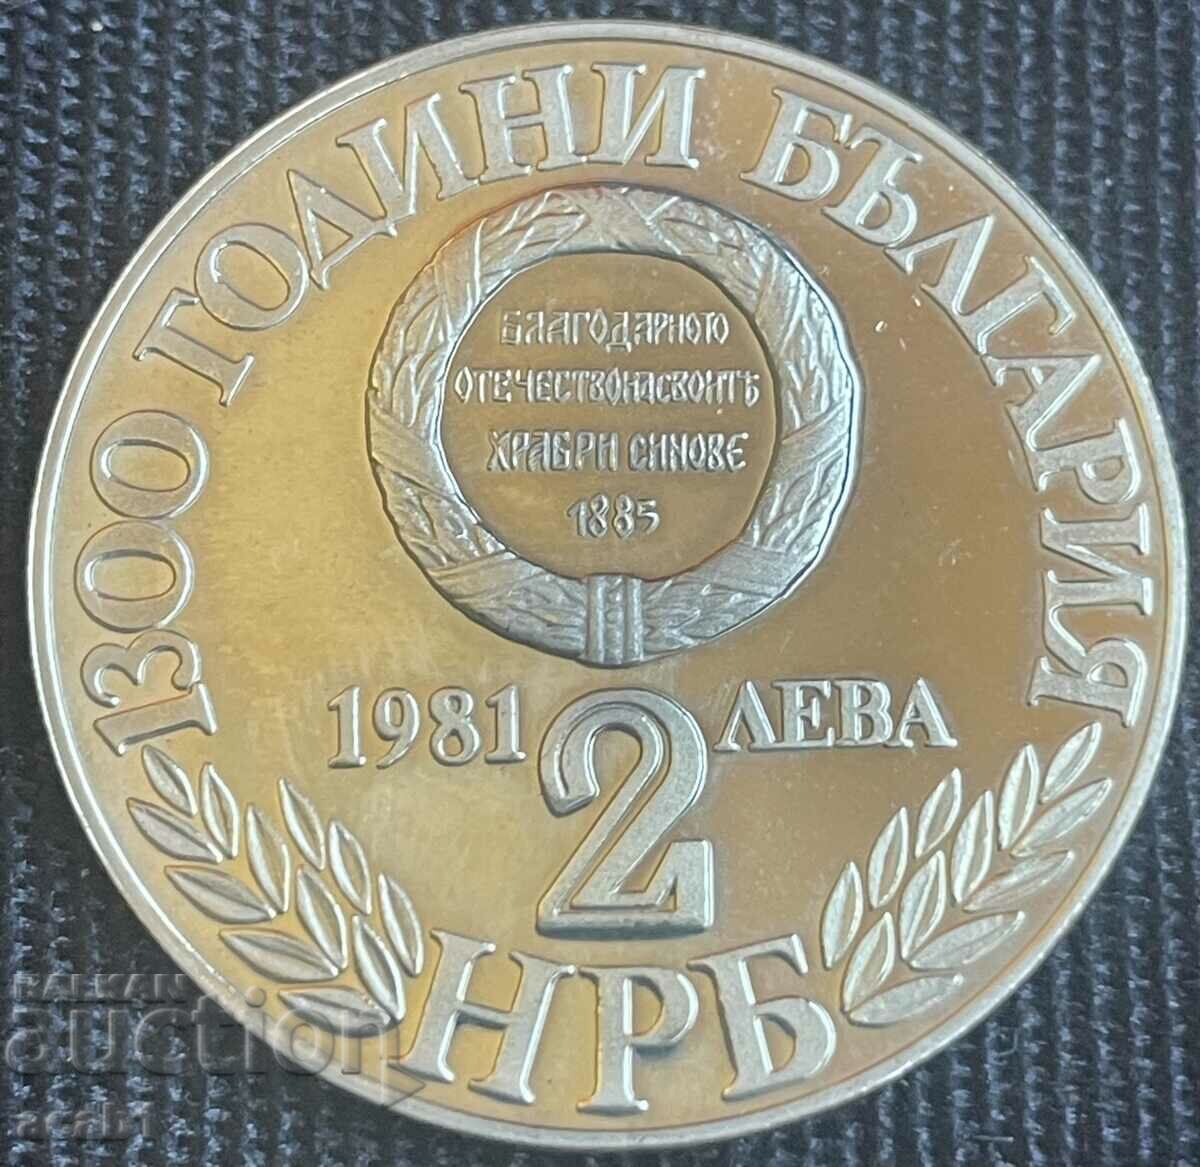 2 BGN 1981 - 1300 years of Bulgaria Unification